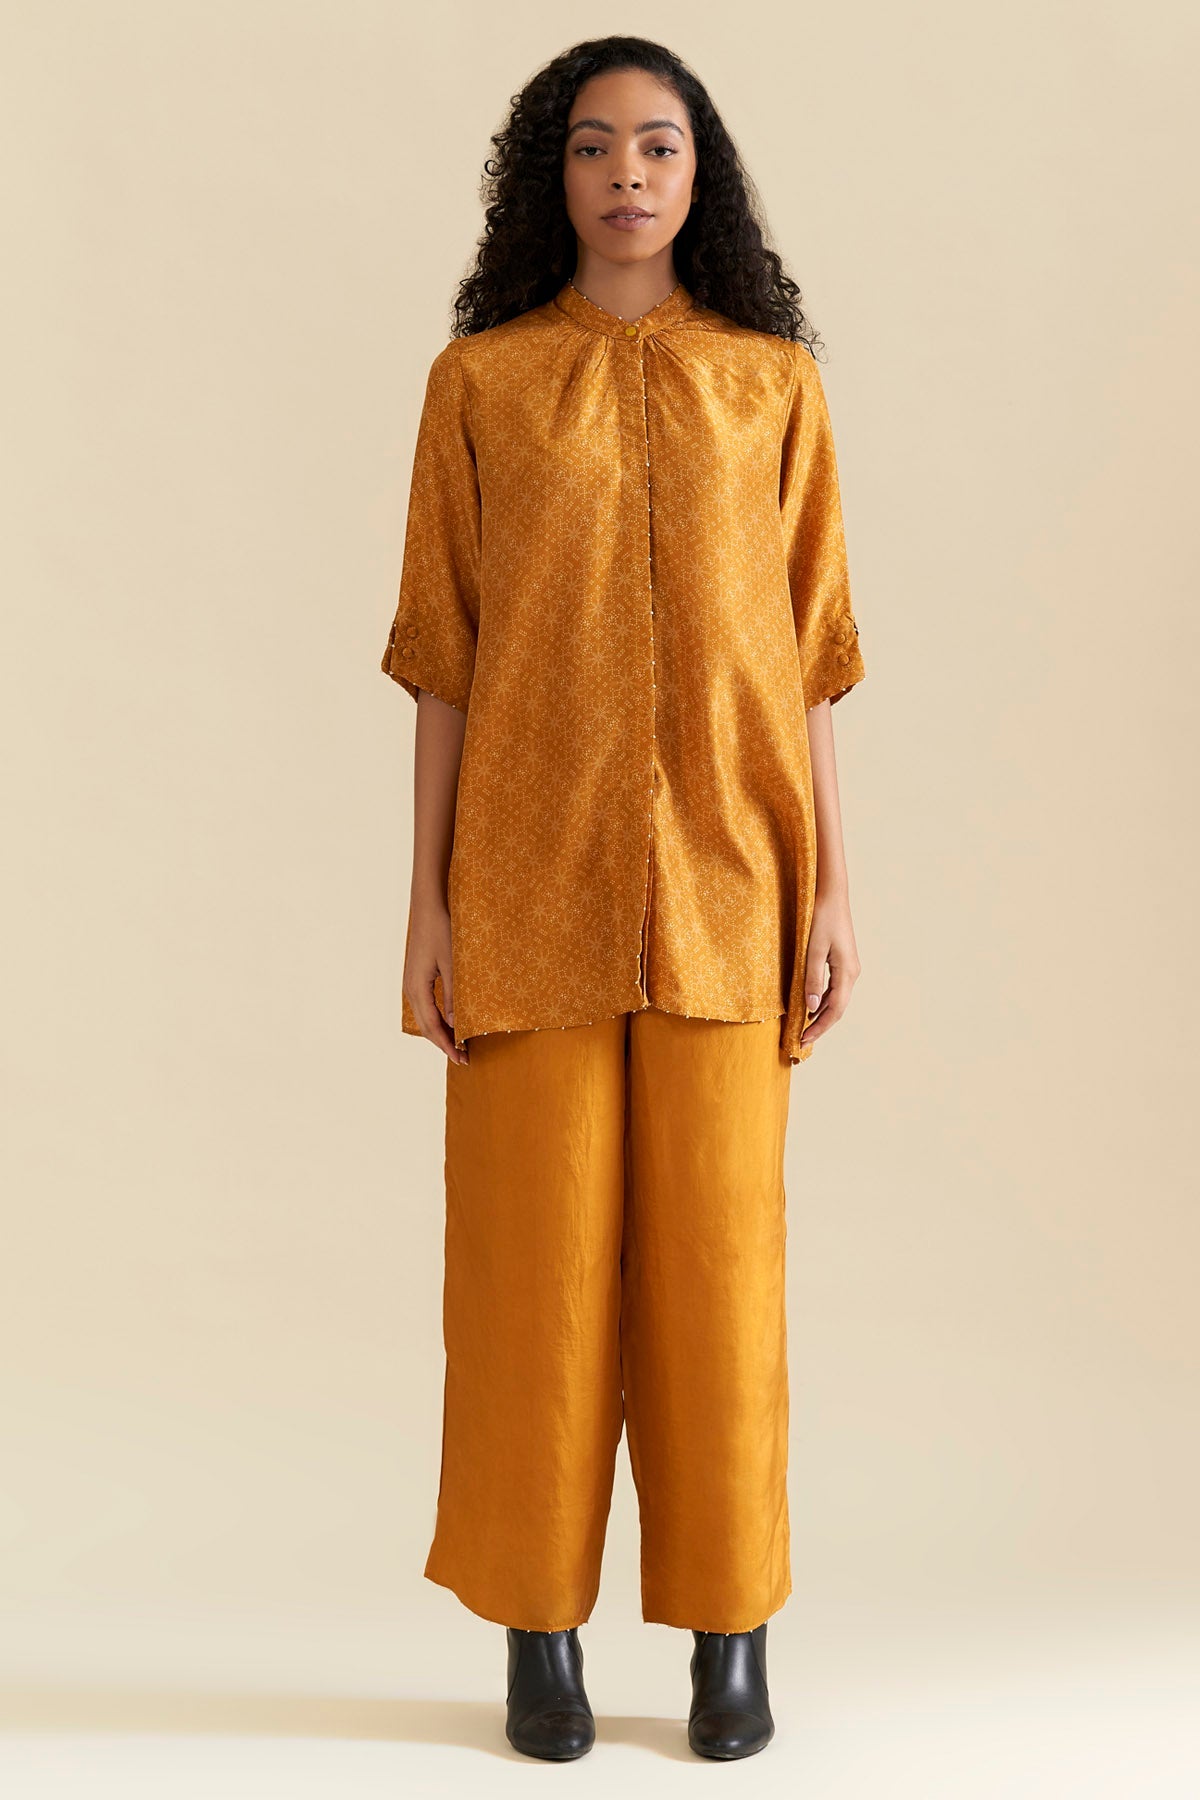 Srota by Srishti Aggarwal Mustard Print Shirt & Palazzo for women online at ScrollnShops